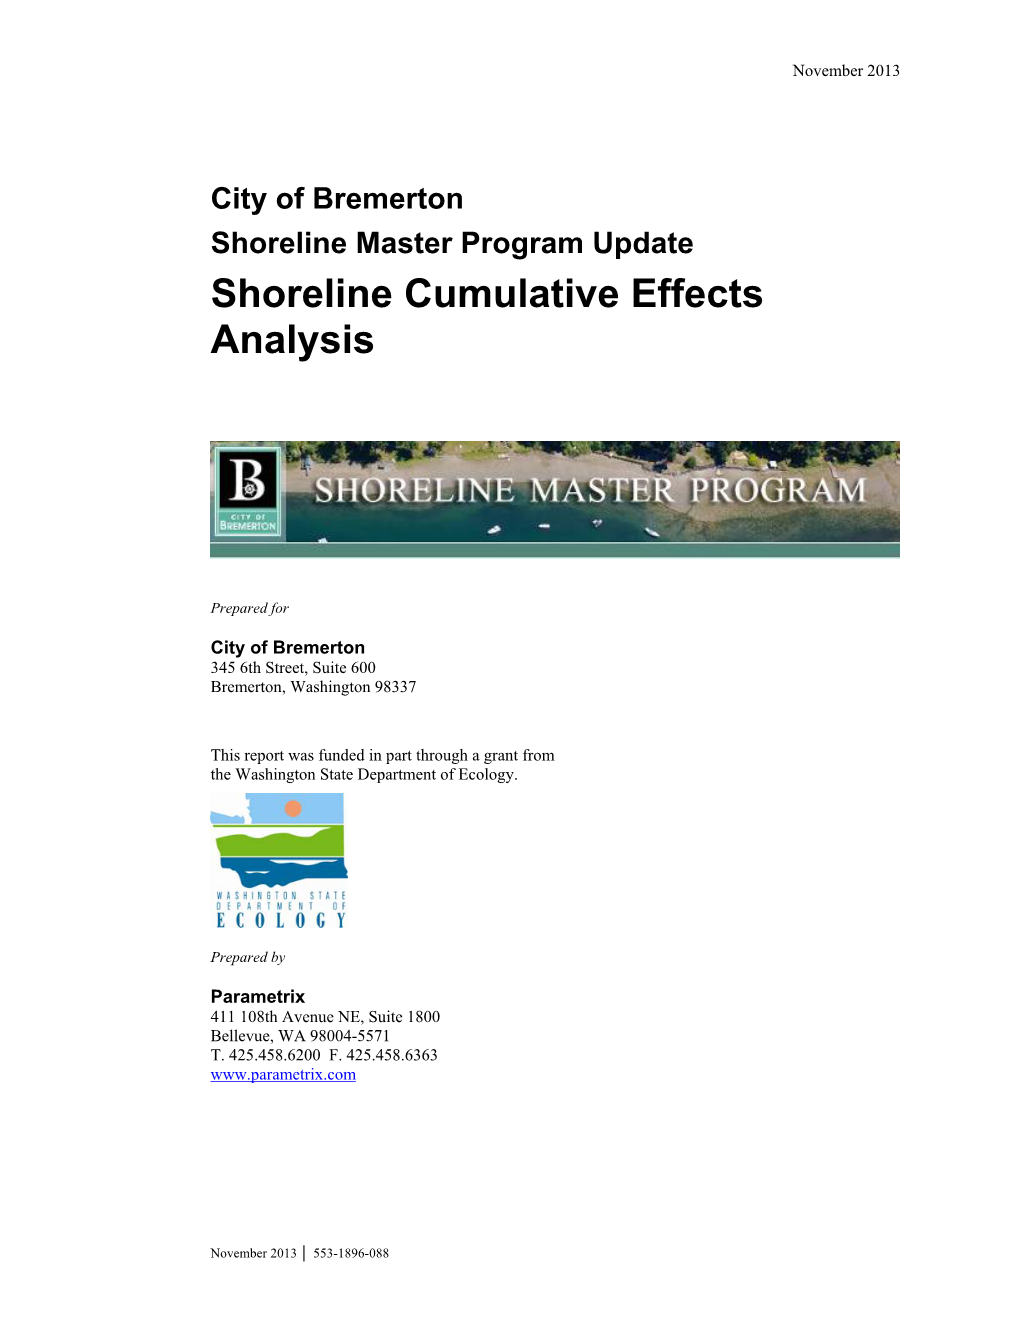 Shoreline Cumulative Effects Analysis